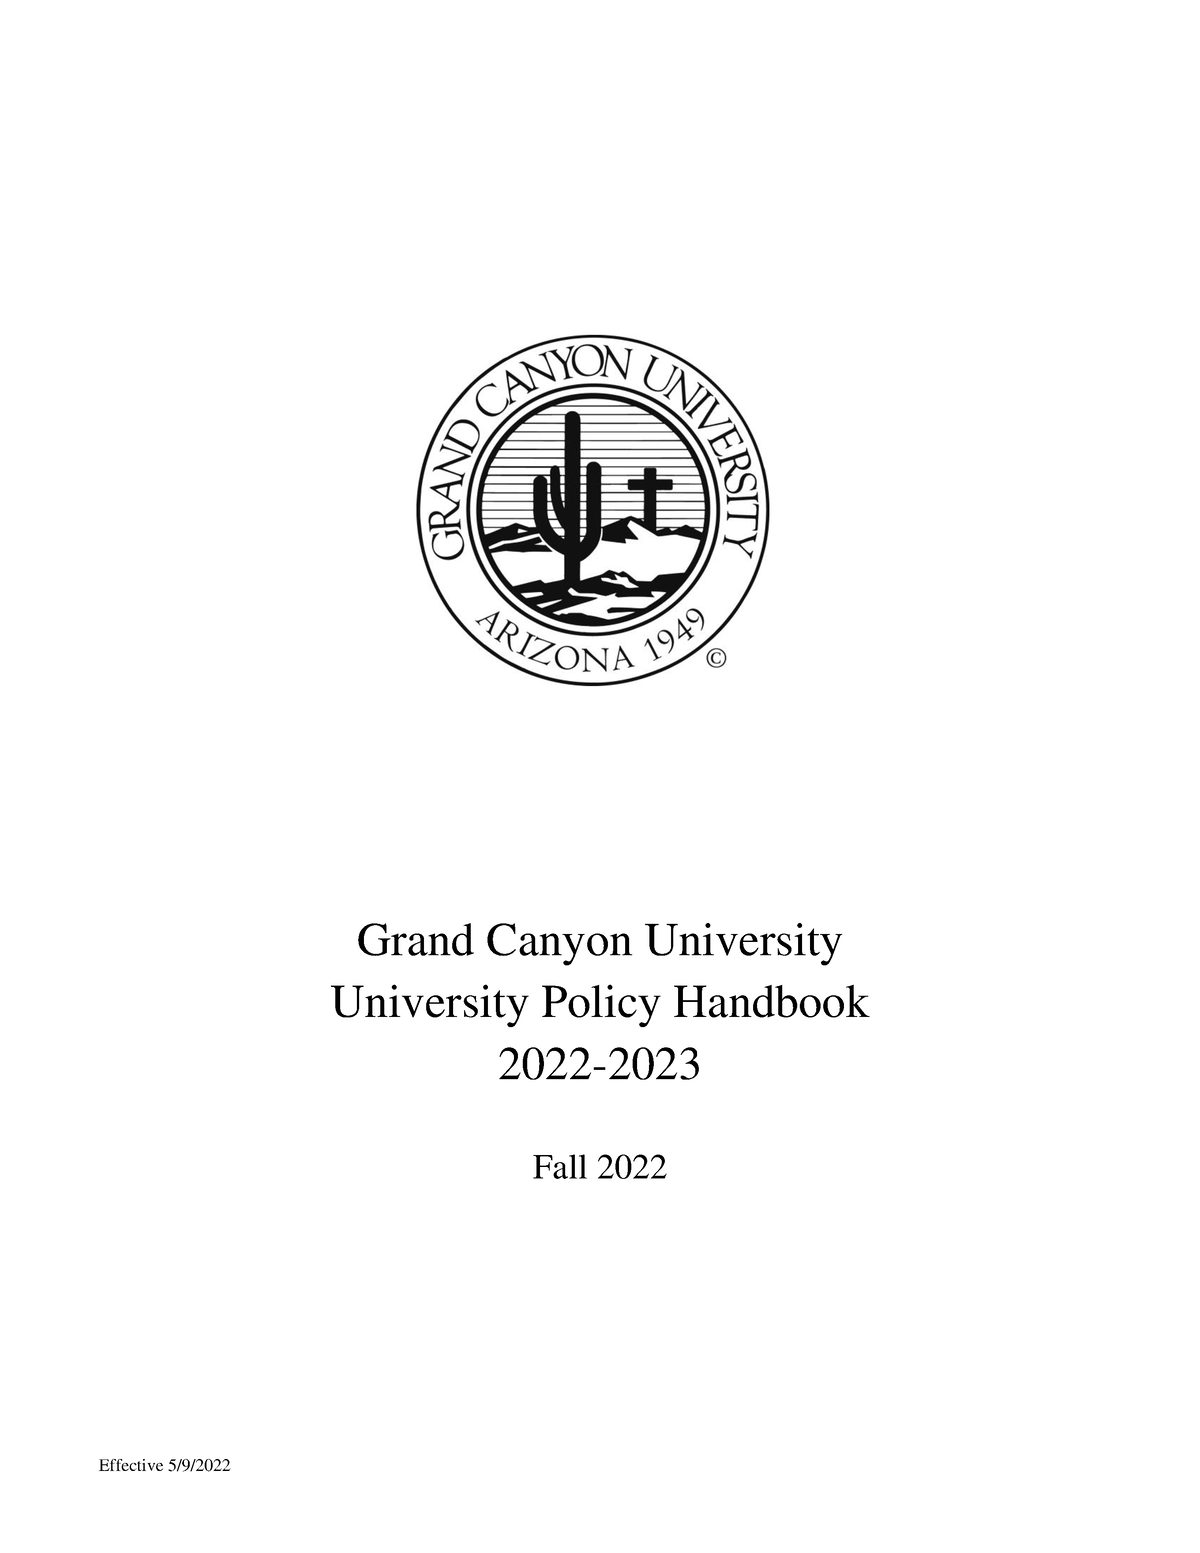 University policy handbook fall 2022 v6 Effective 5/9/ Grand Canyon